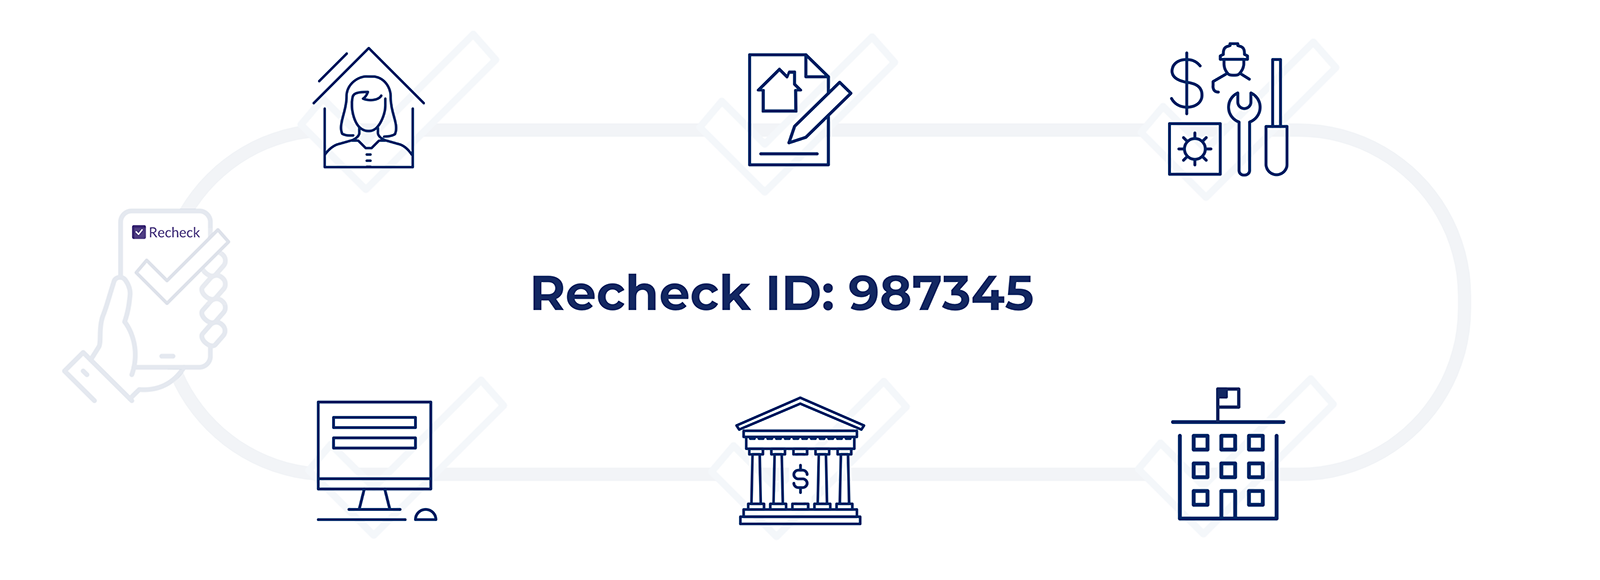 Recheck ID graphic-1600x580